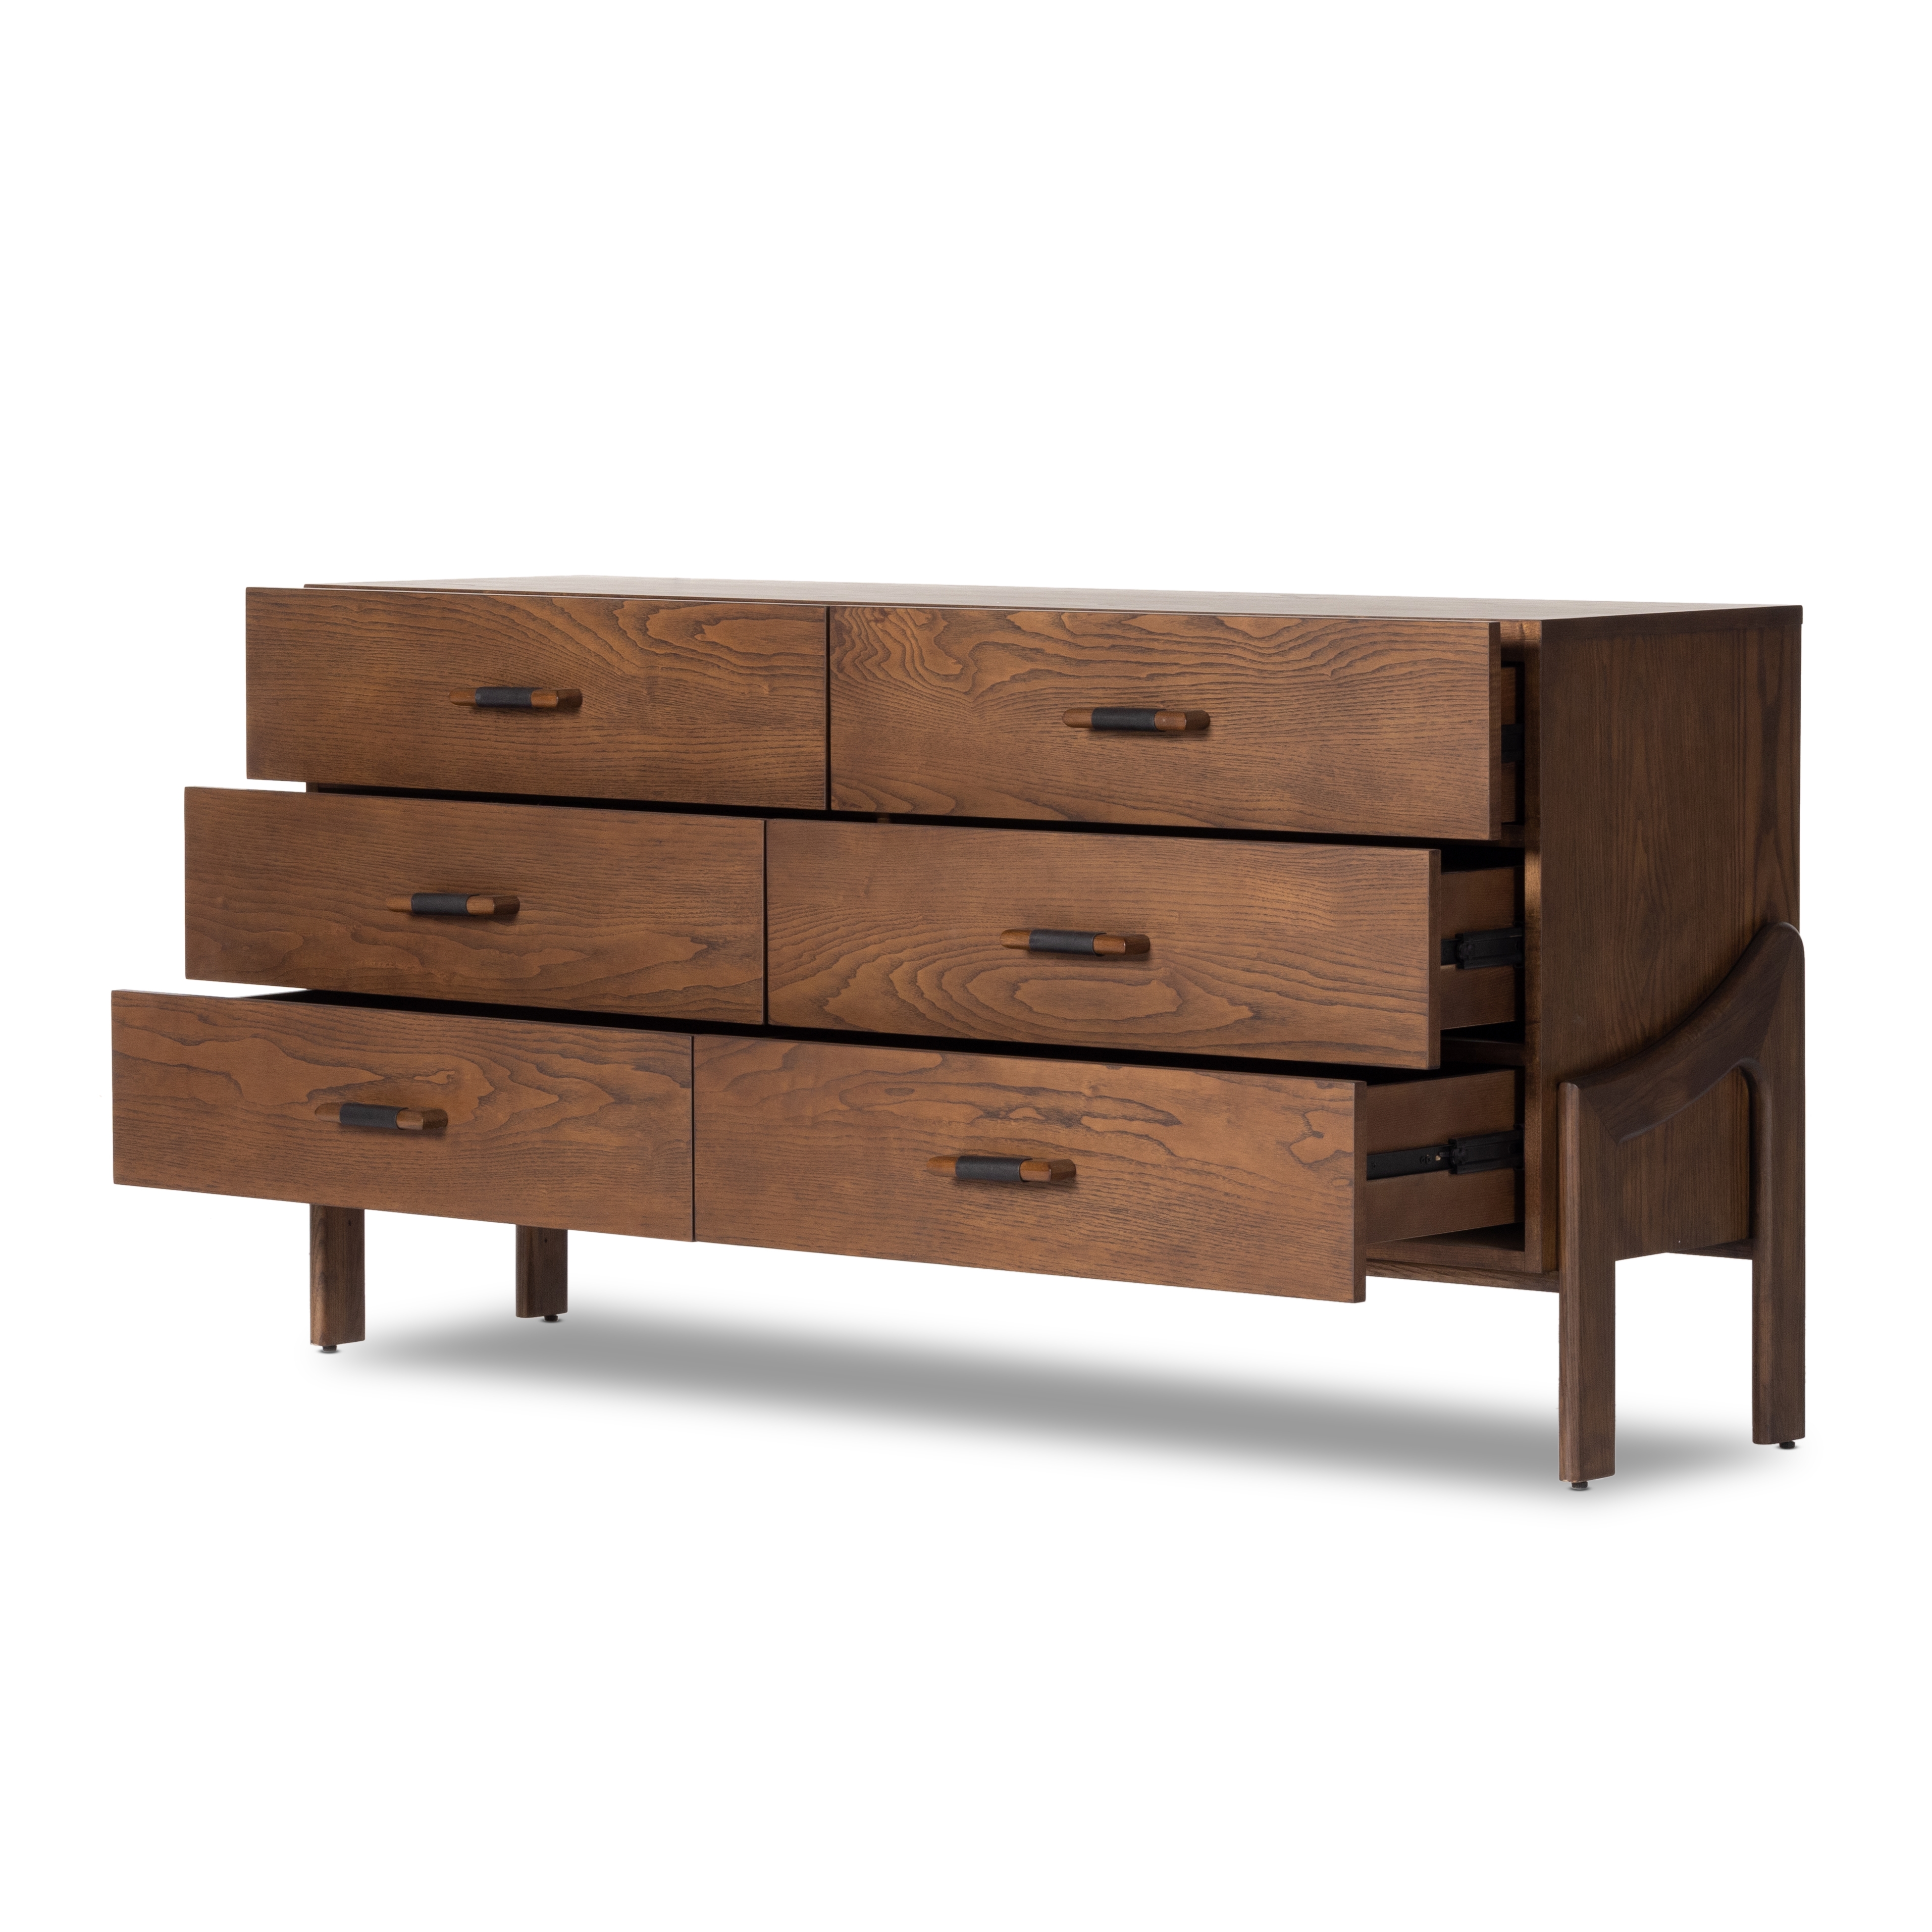 Halston 6 Drawer Dresser - Terra Brown Ash Veneer - Image 4